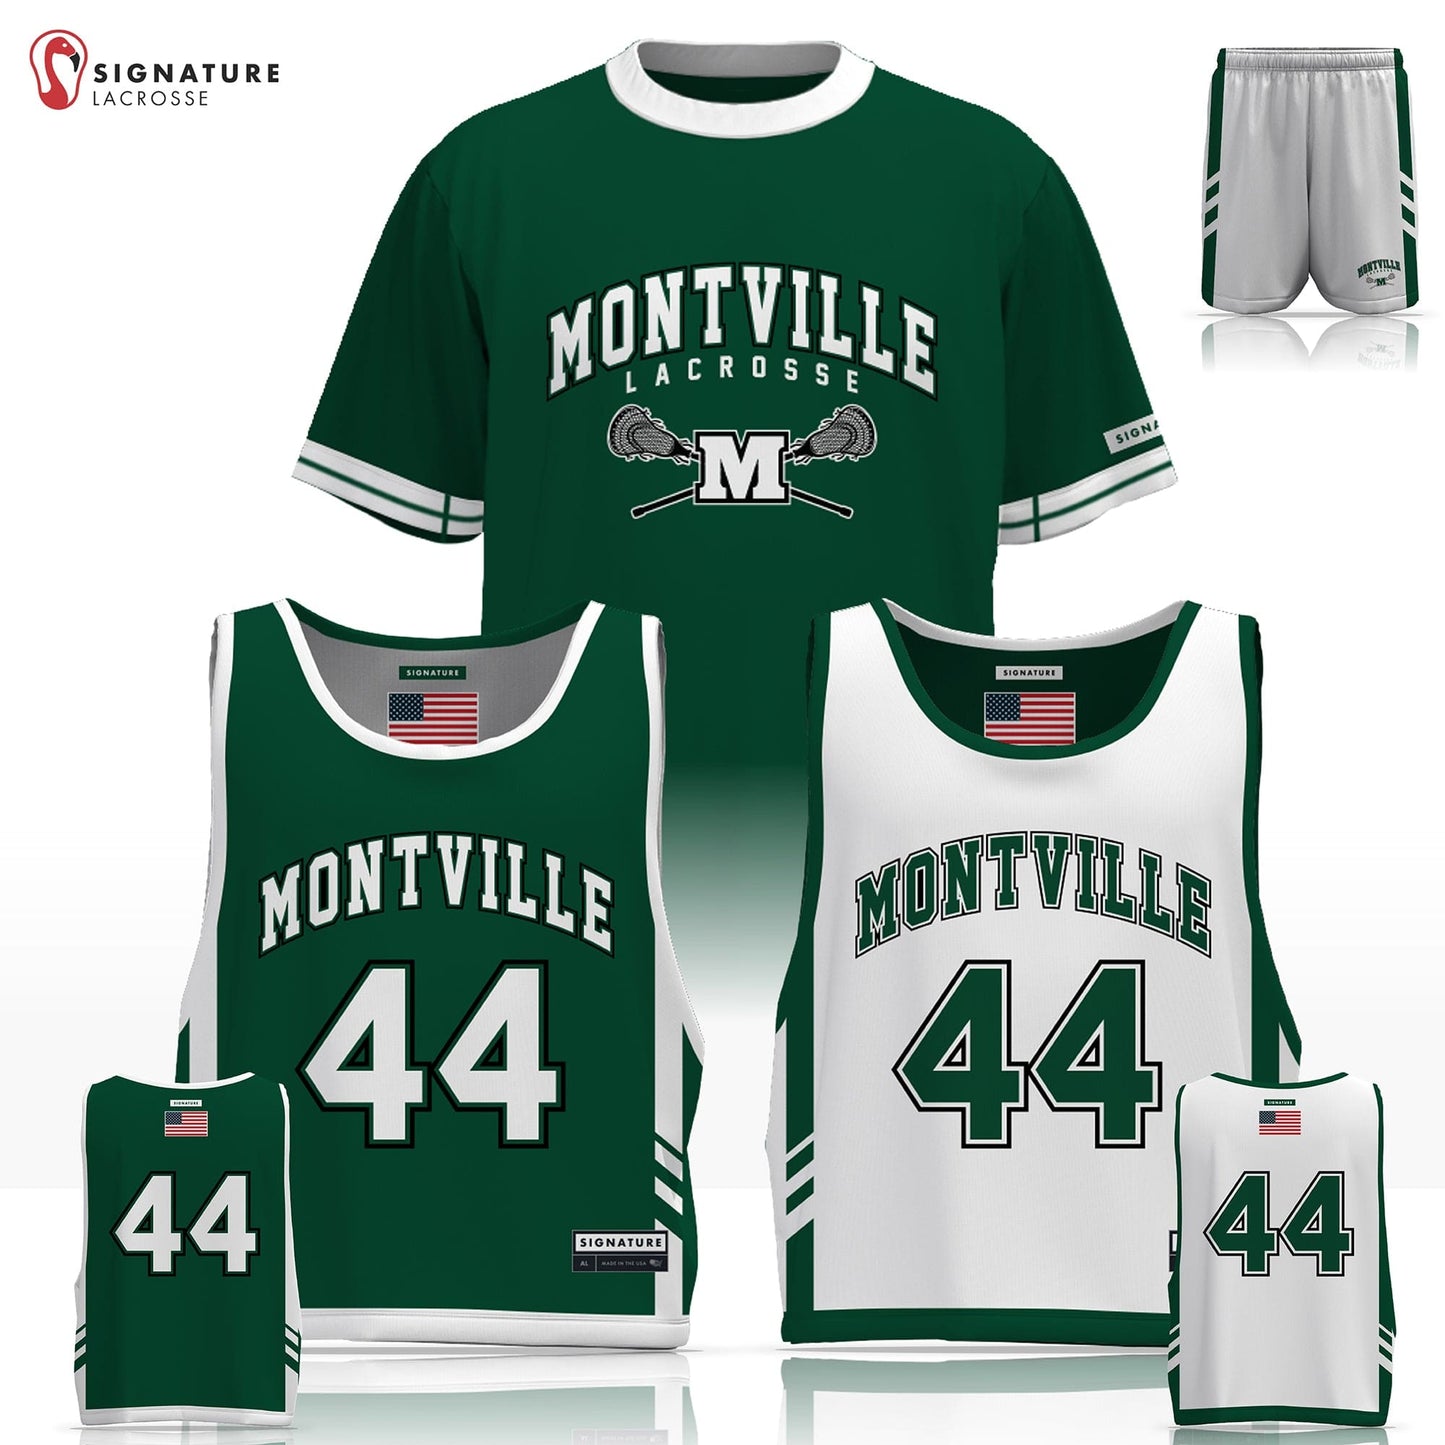 Montville Lacrosse Men's 4 Piece Player Game Package: Montville Lacrosse Signature Lacrosse